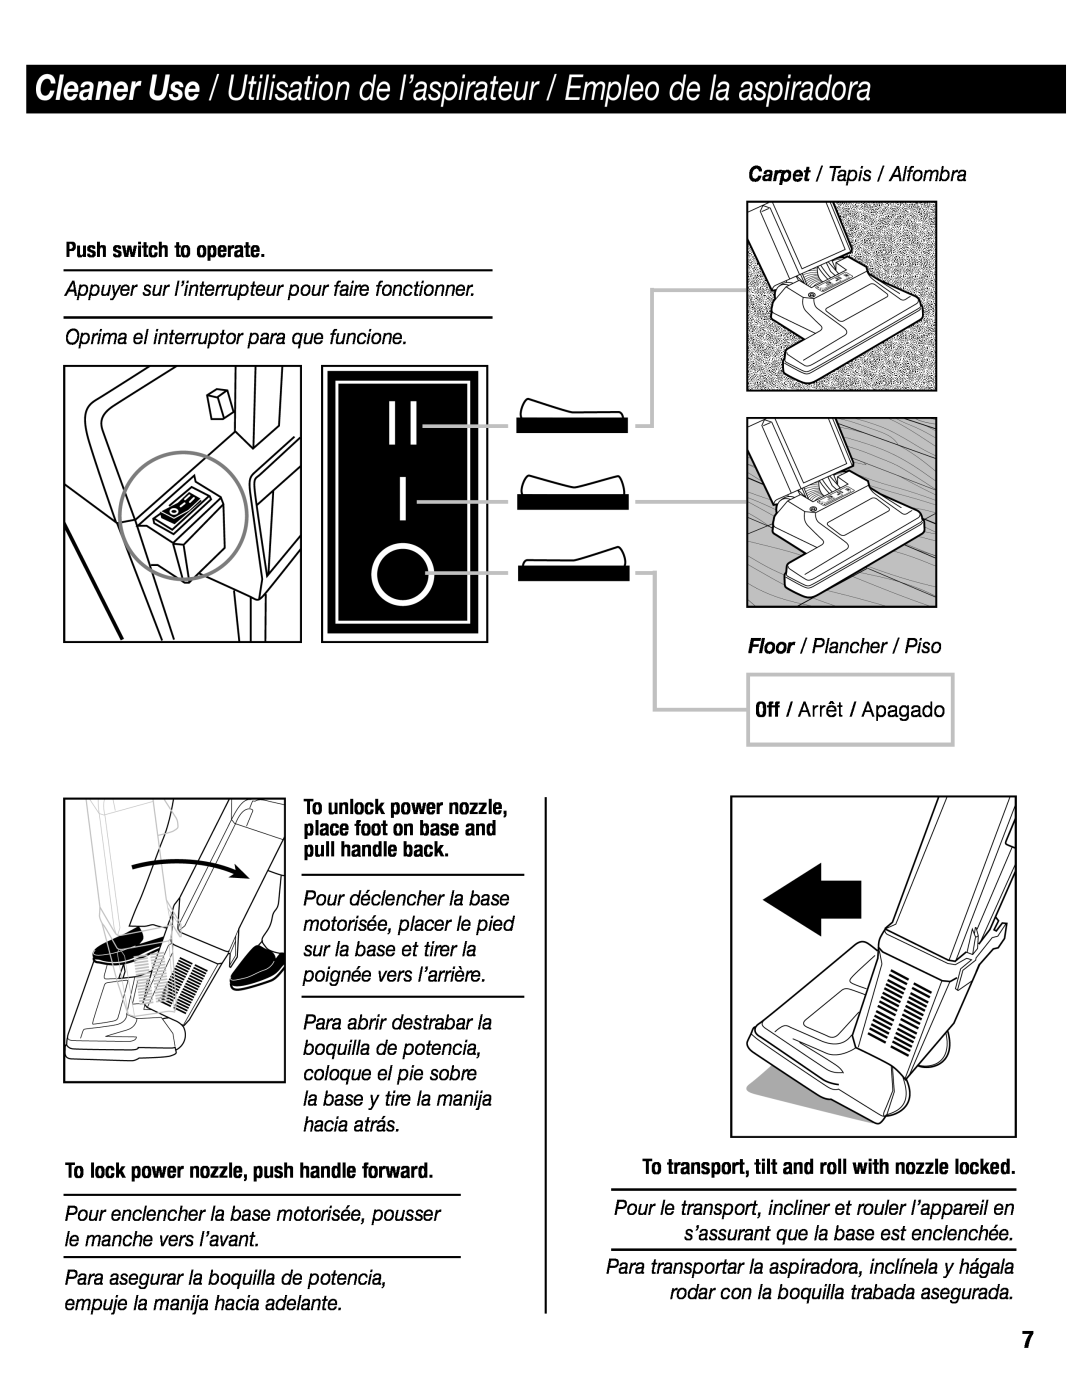 Eureka SC6610 manual Cleaner Use / Utilisation de l’aspirateur / Empleo de la aspiradora, Carpet / Tapis / Alfombra 